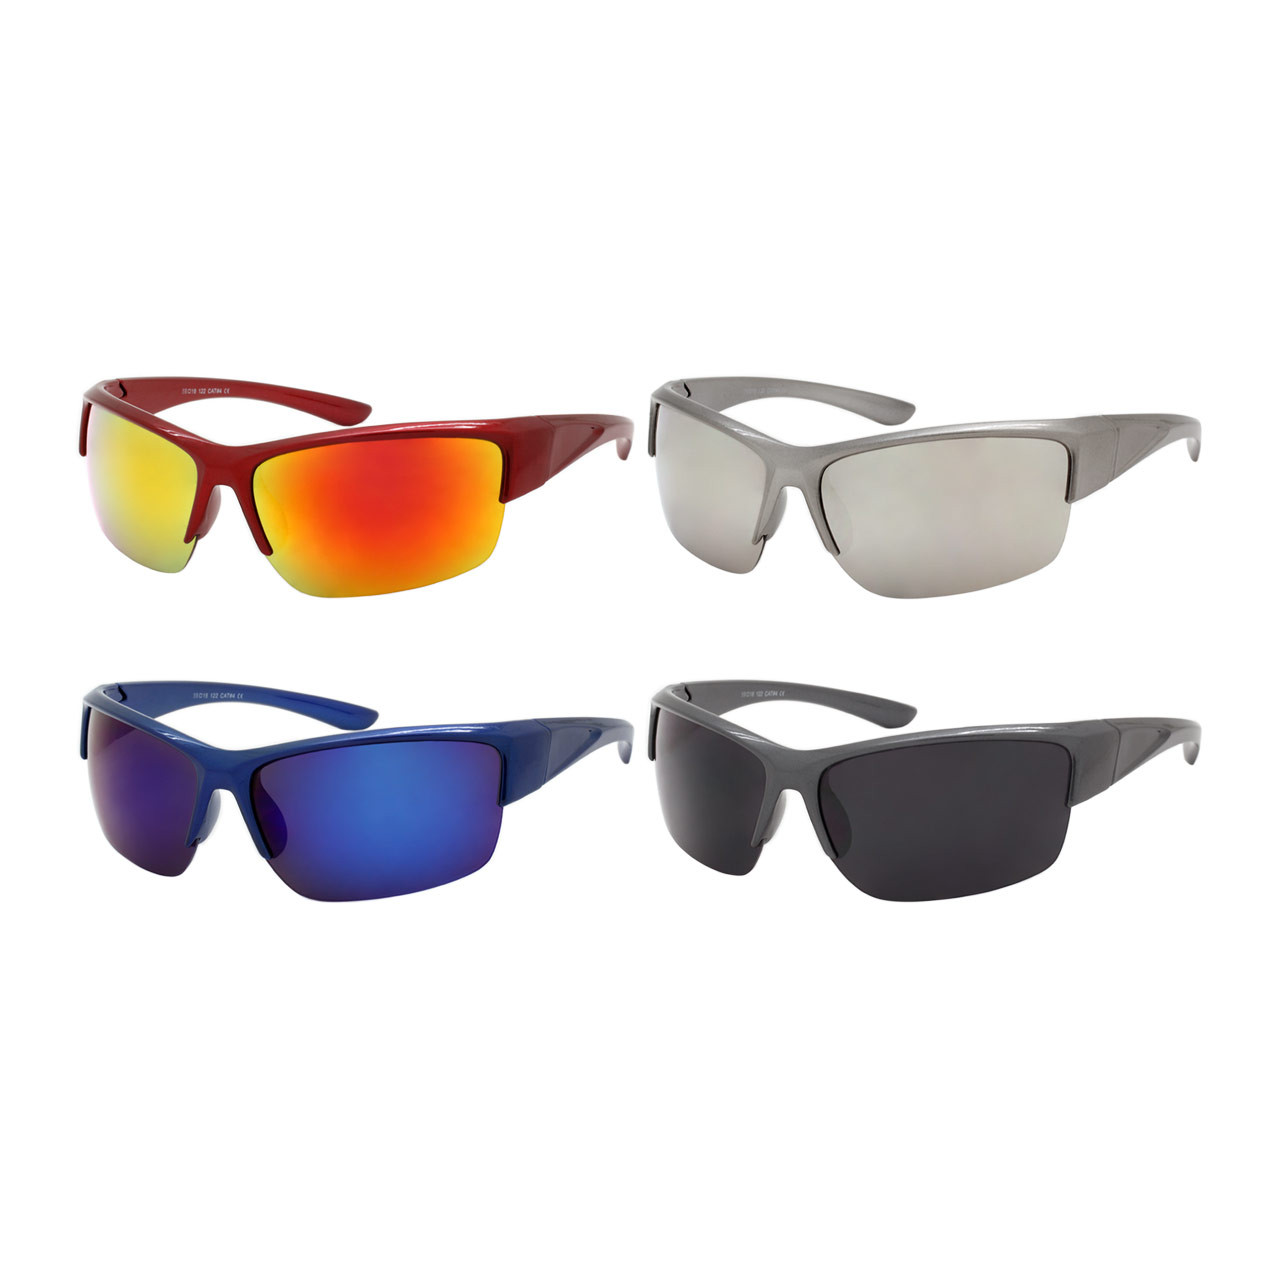 Pack of 12: Jimmad Athletic Ski Looking Half Rim with Logos Wholesale Men Sport Sunglasses